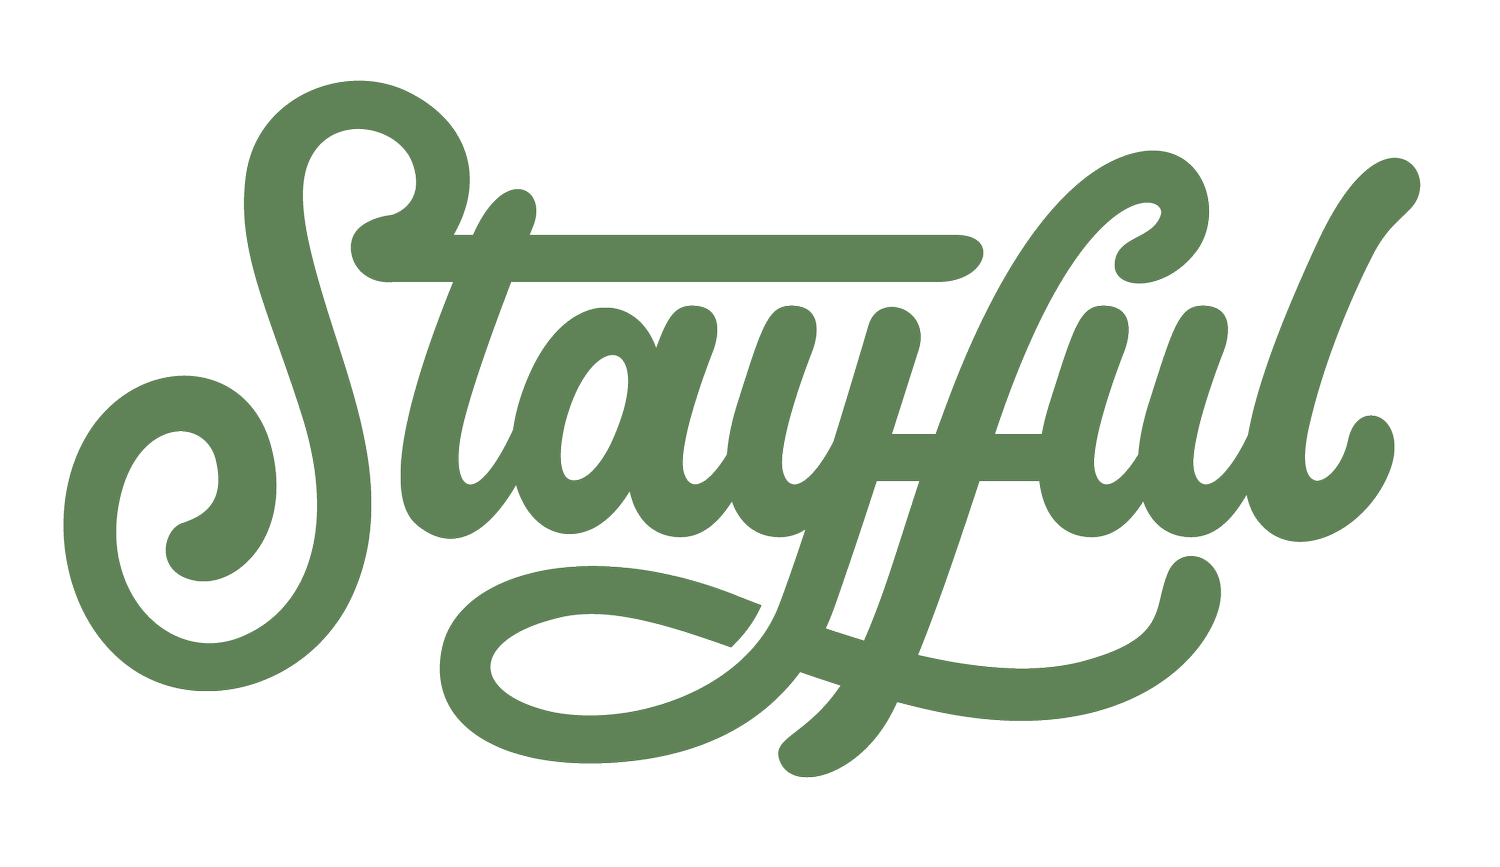 Stayful